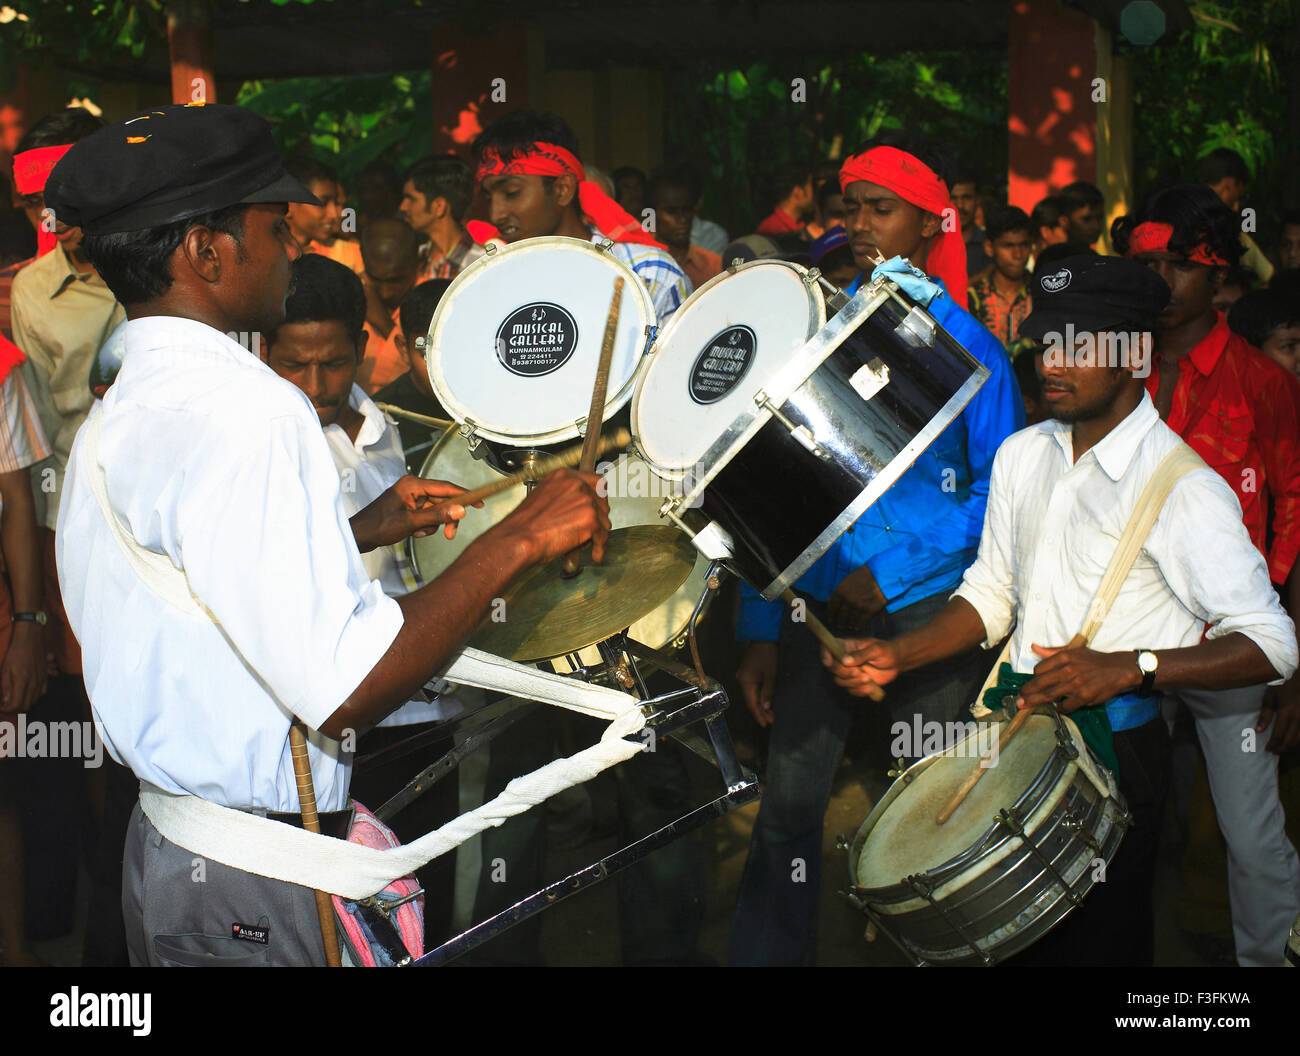 Hombres tocando instrumentos musicales fotografías e imágenes de alta  resolución - Alamy